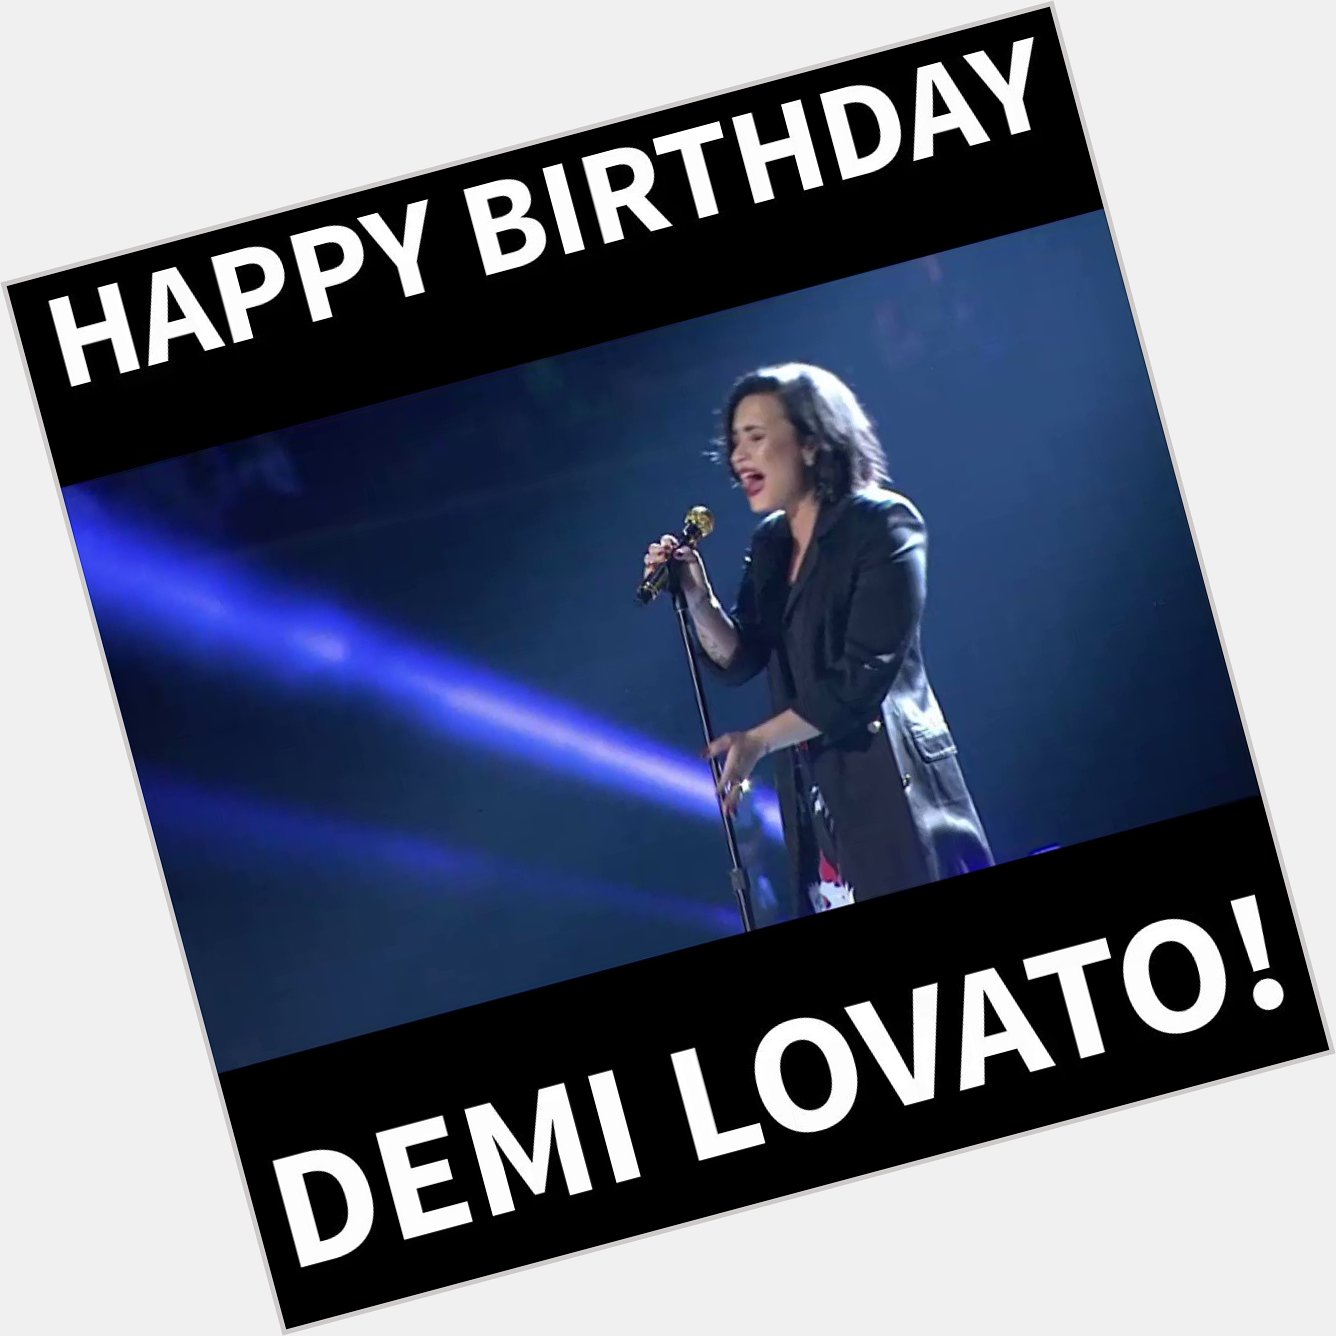 Happy birthday, Demi Lovato! Sending light and love!  